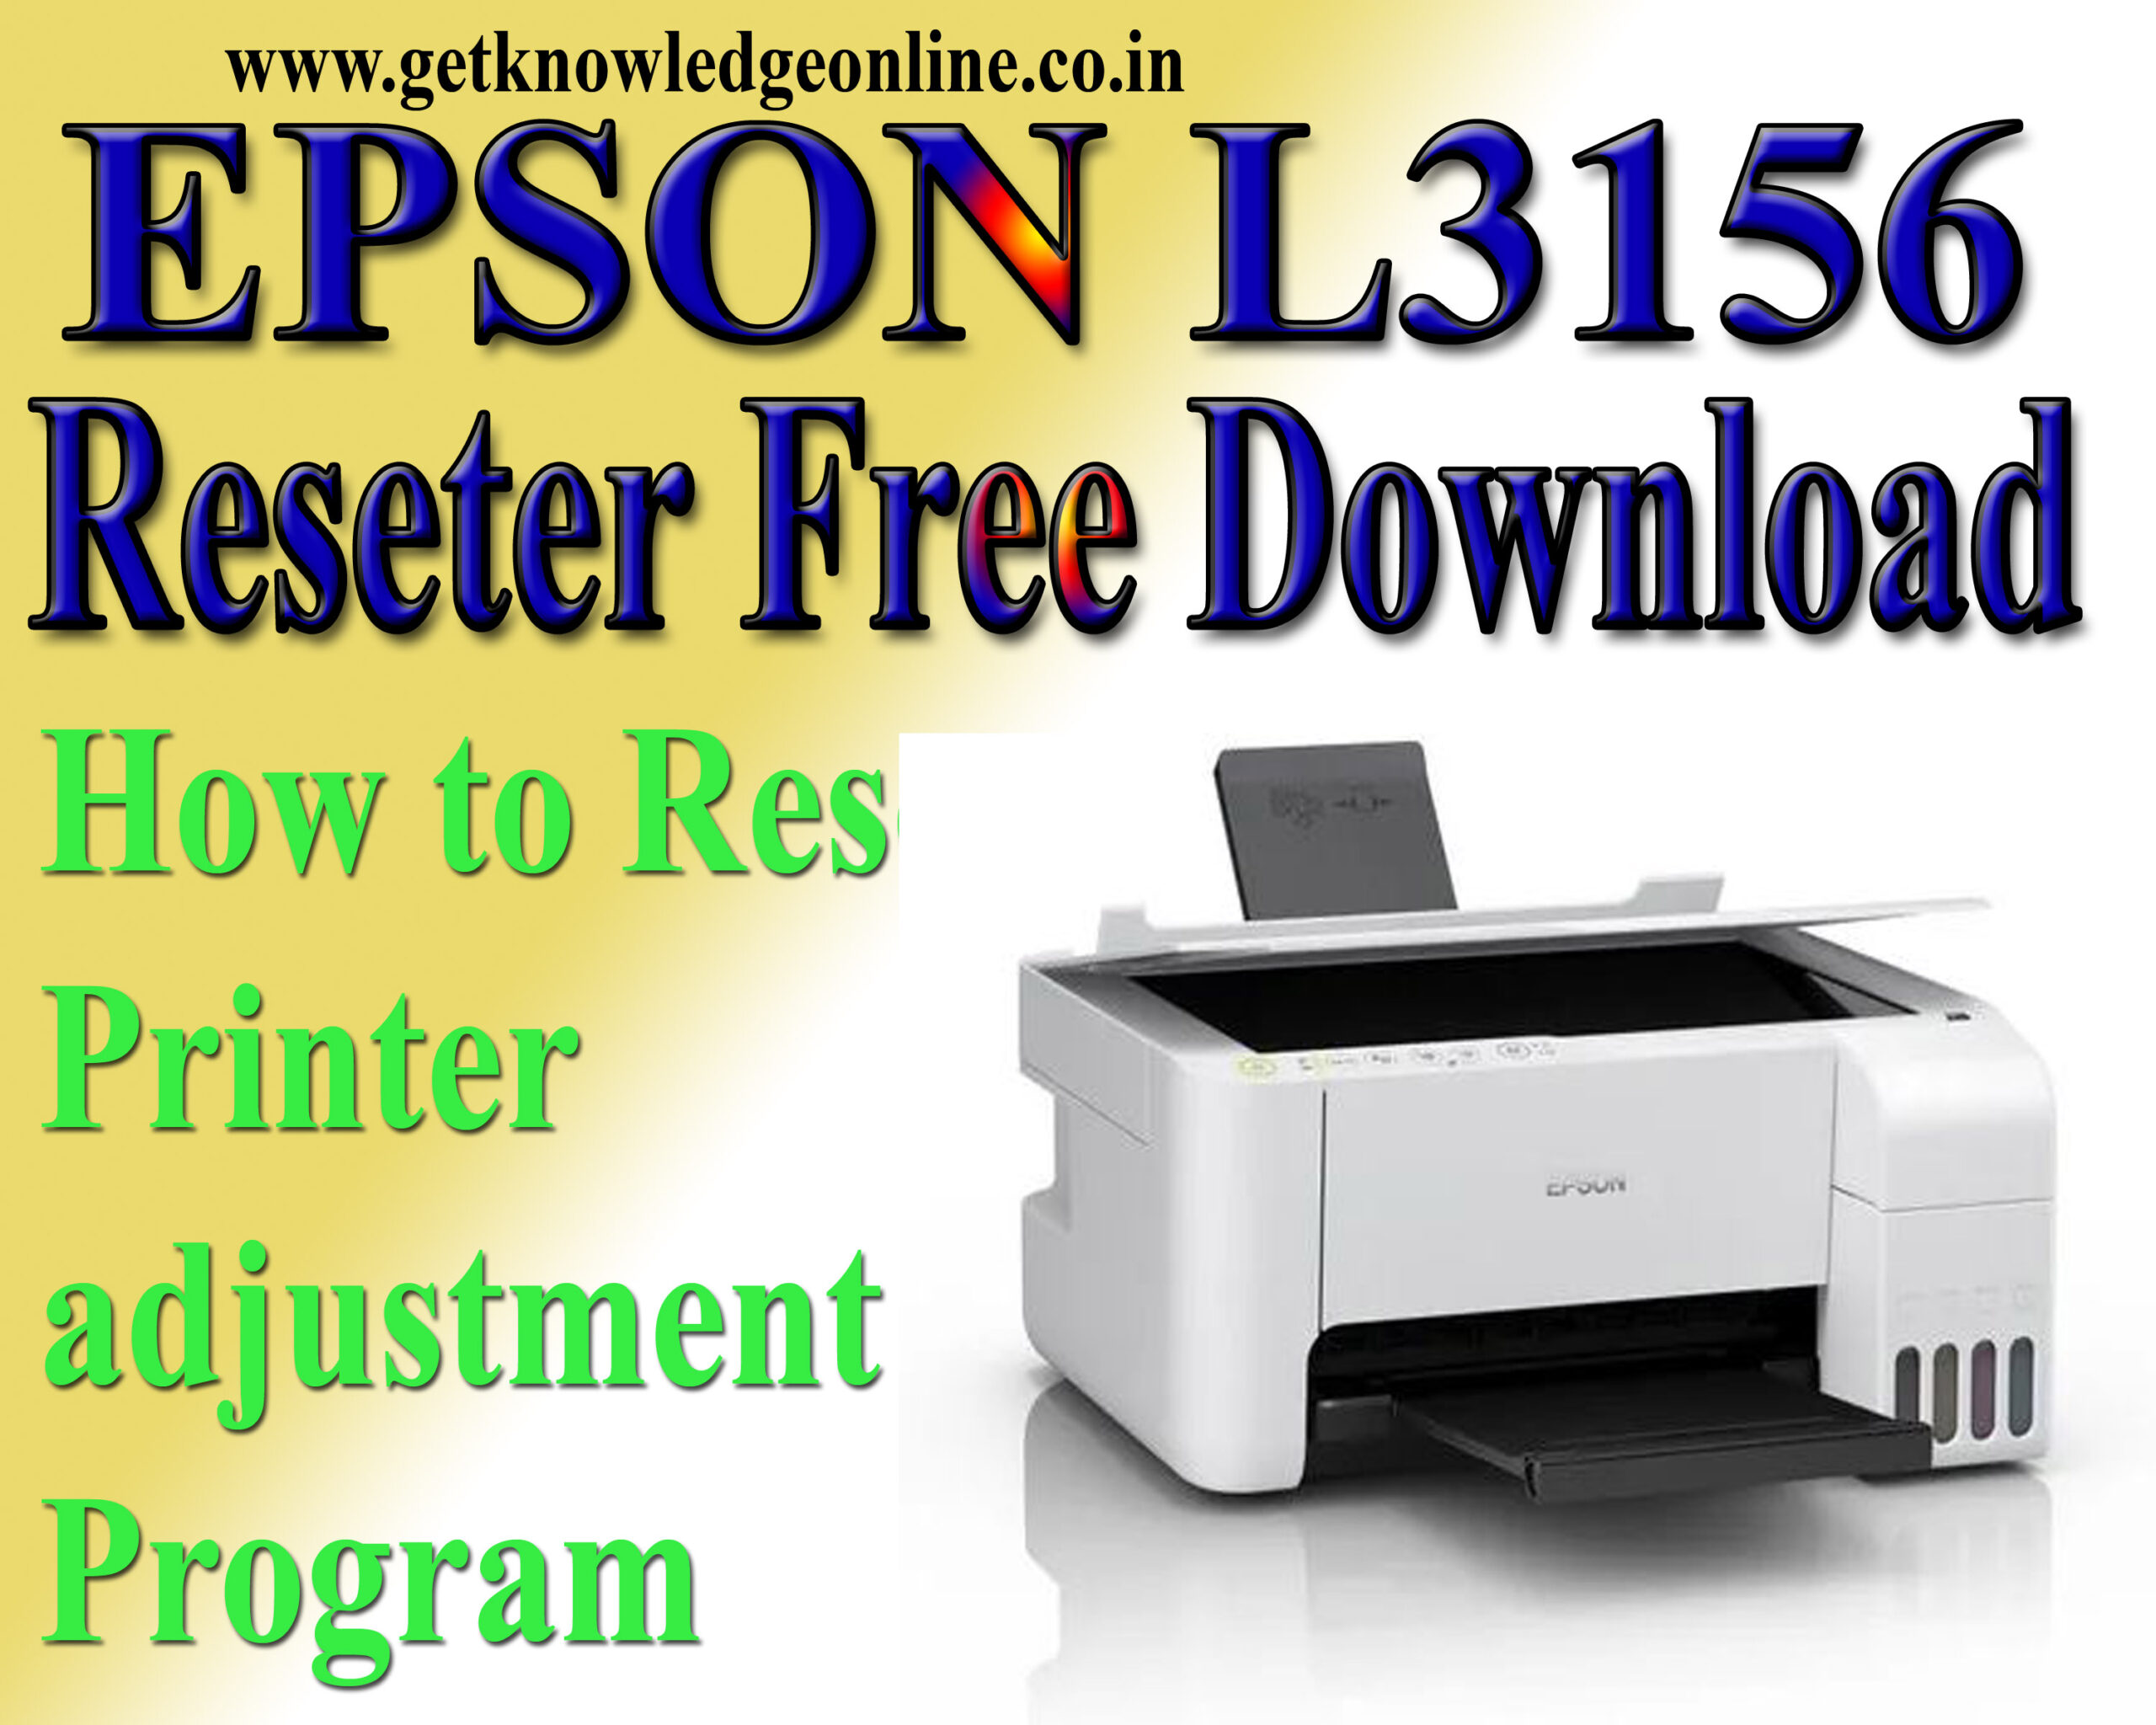 Epson L3156 Reset Adjustment Program